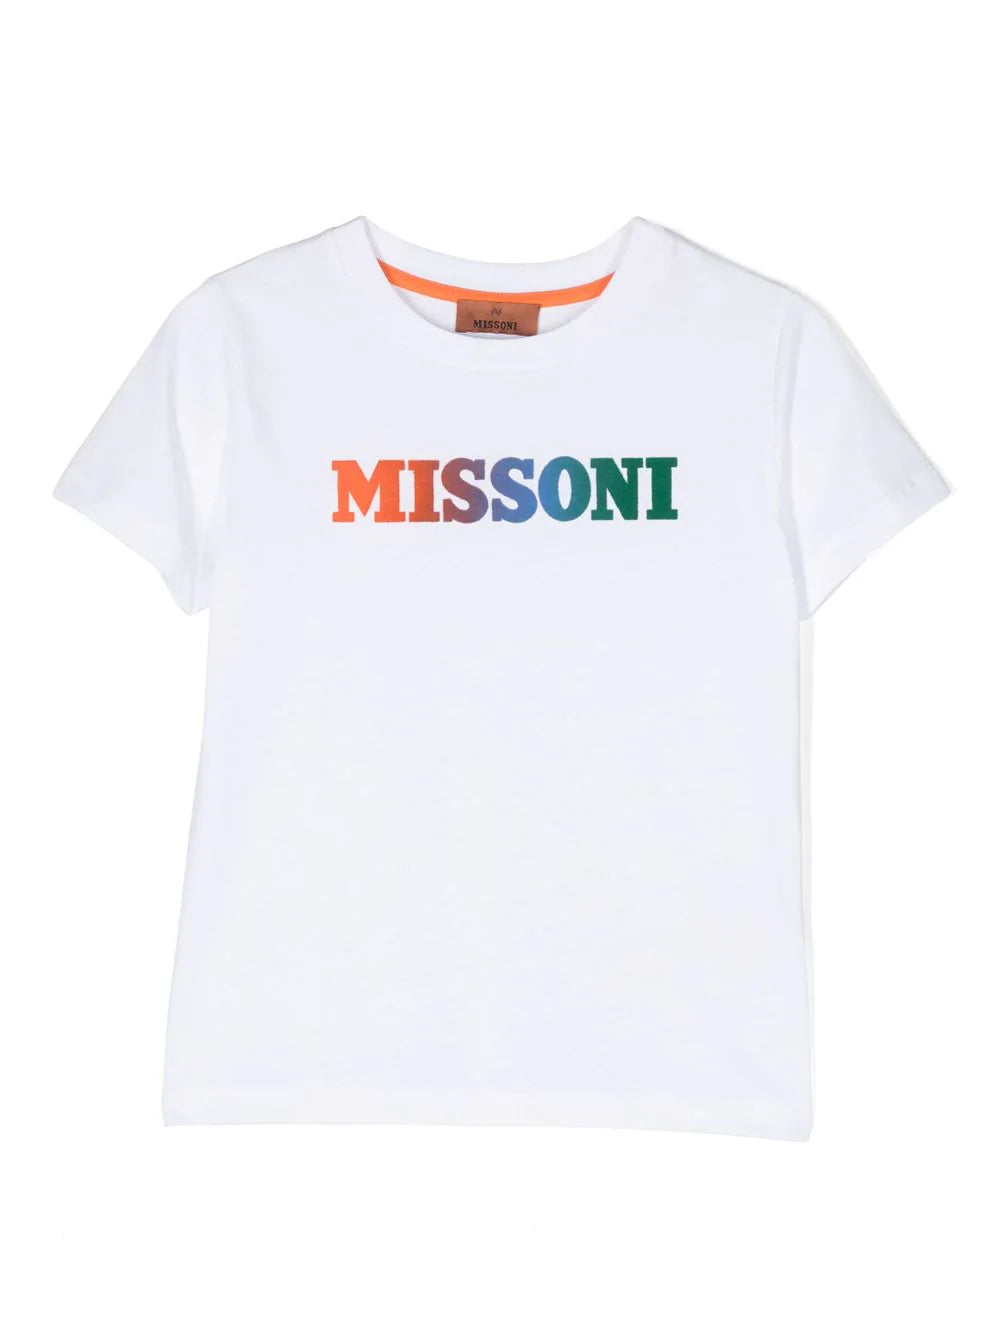 Missoni Kids Logo-Print Cotton T-Shirt